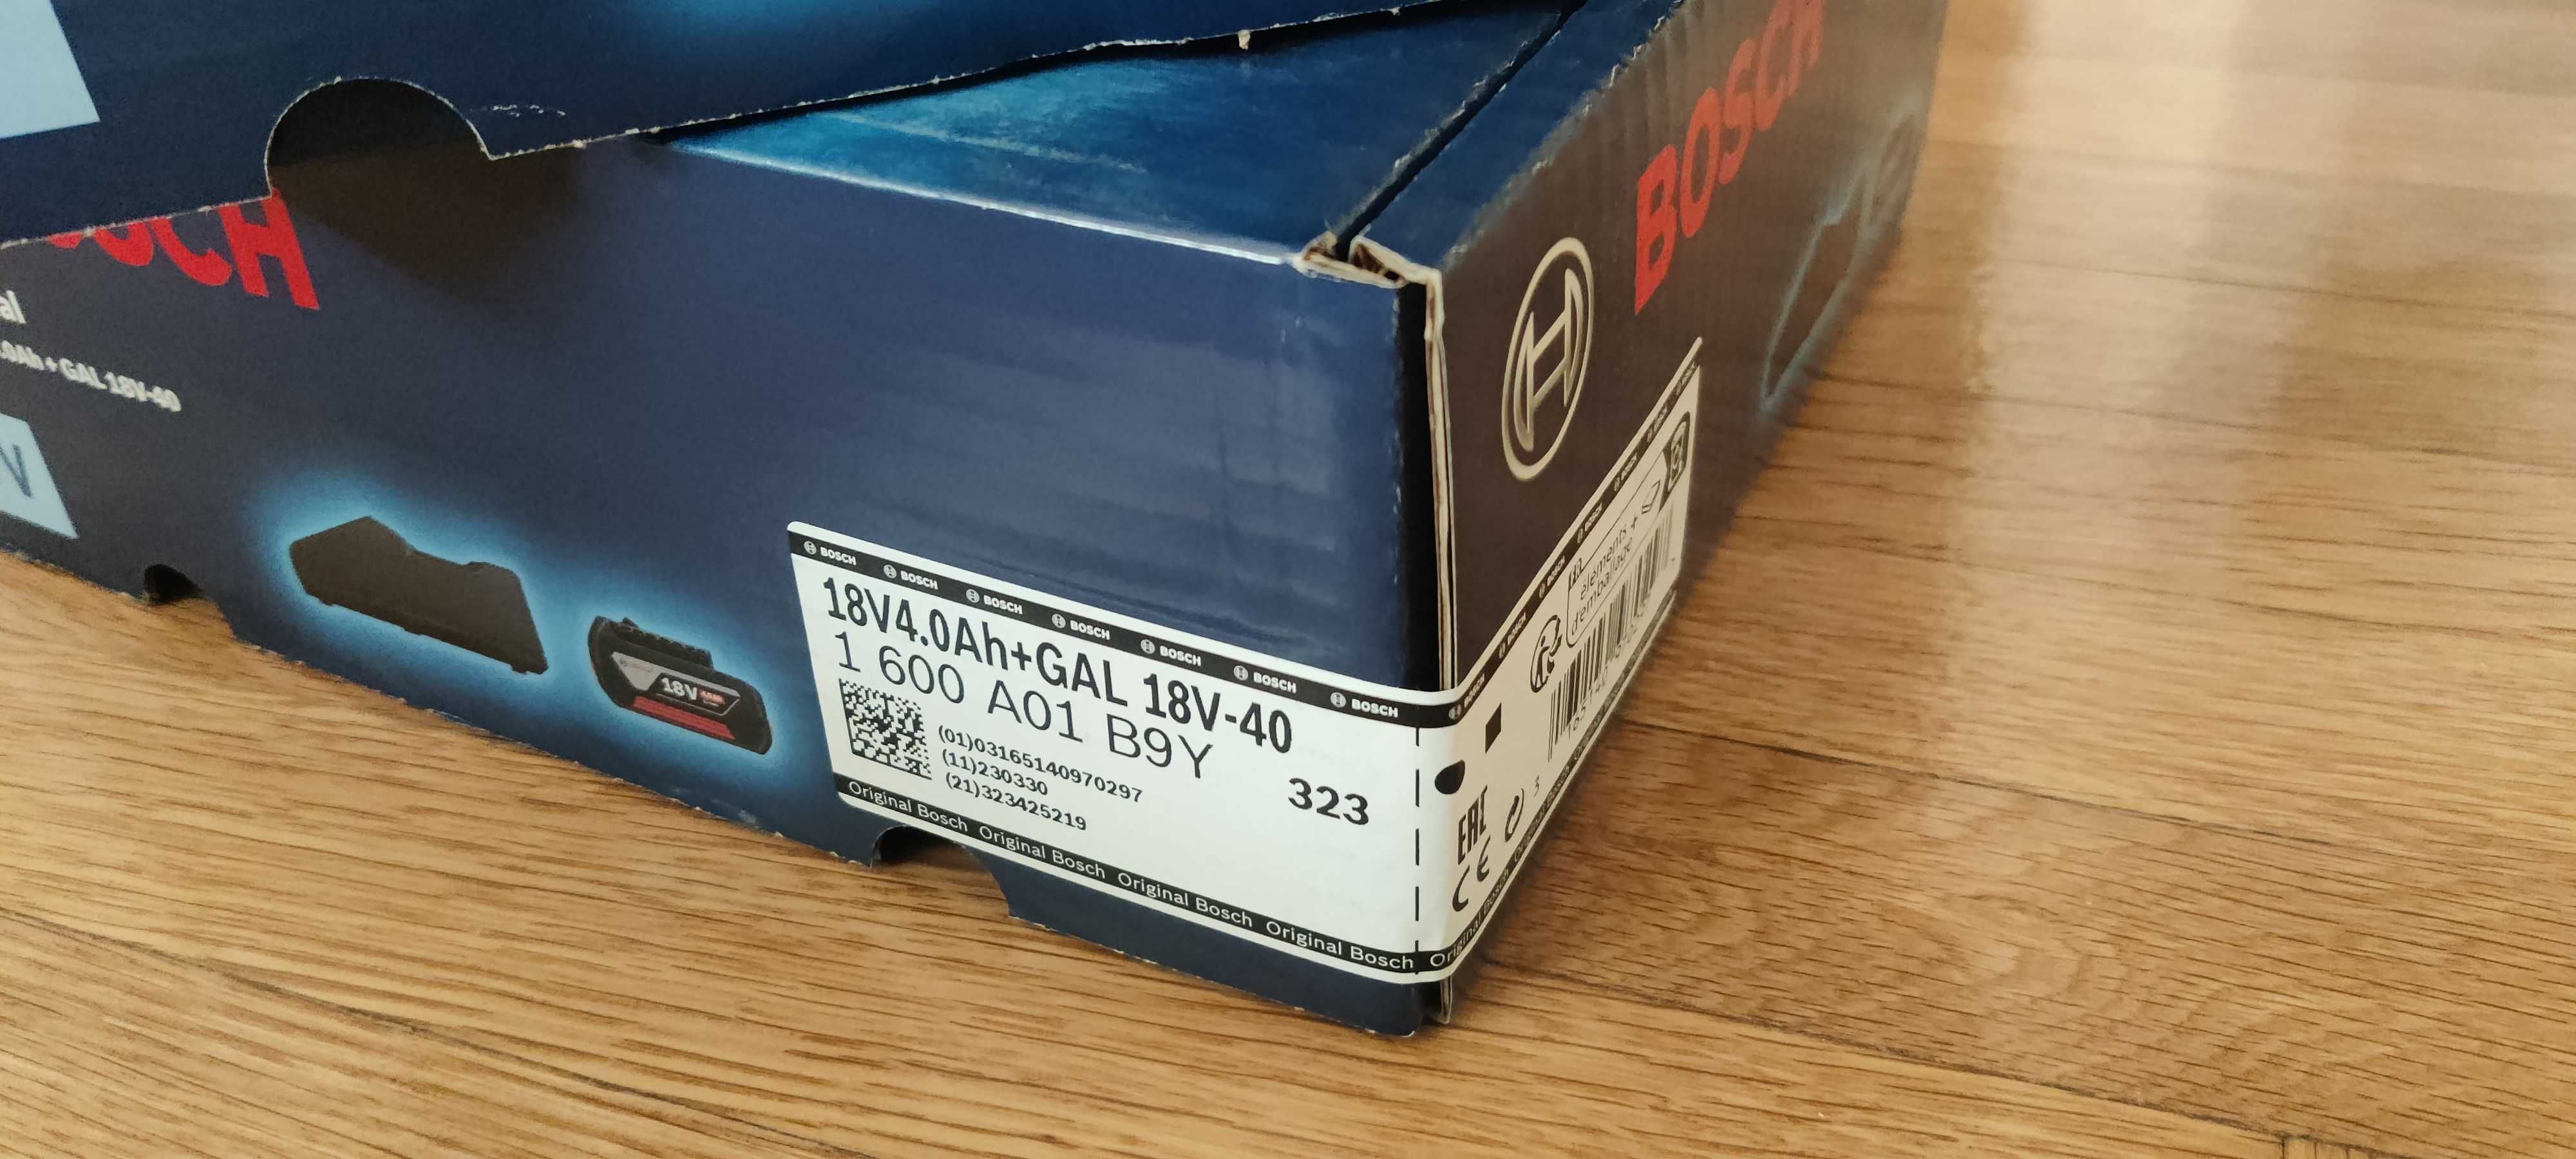 Pack 1 batterie GBA 18V 4.0Ah + Chargeur GAL 18V-40 - 1600A01B9Y 